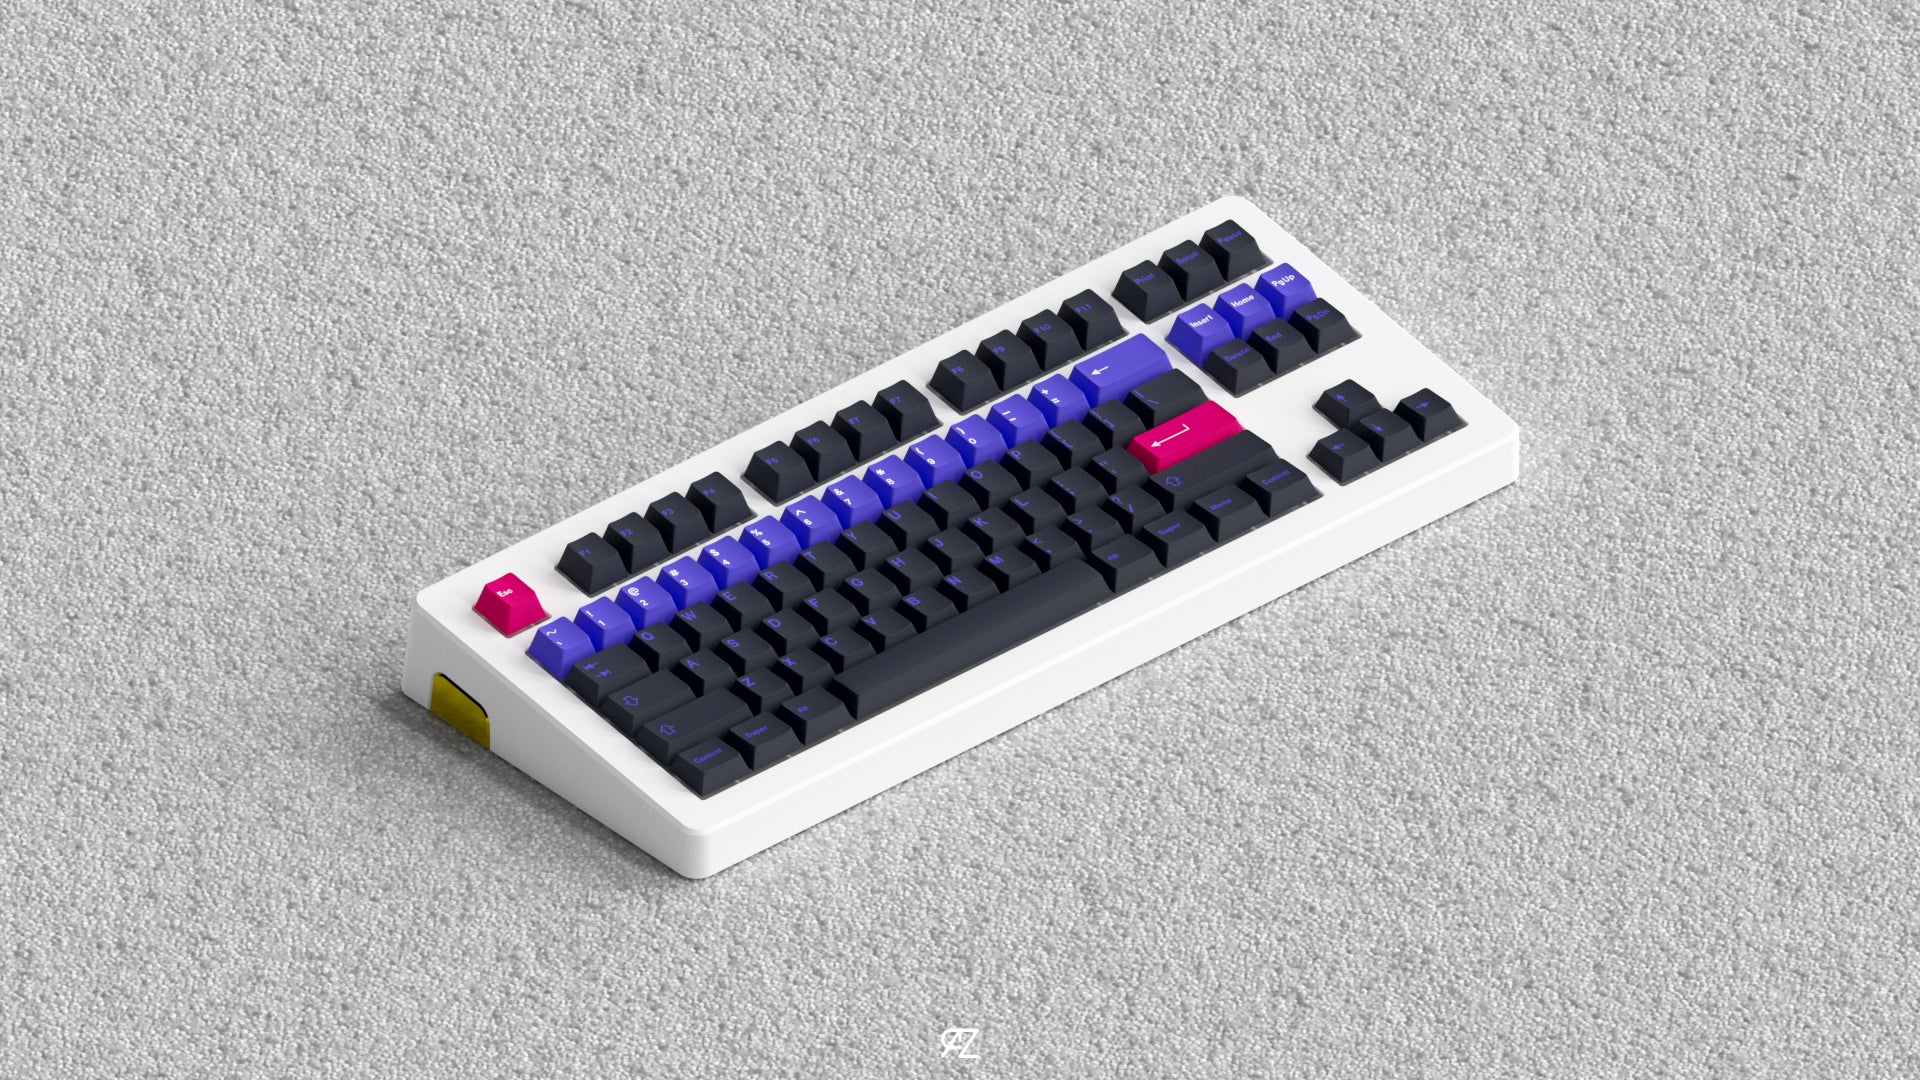 Rama U80 keyboard with GMK Avanguardia keycap set Base Kit